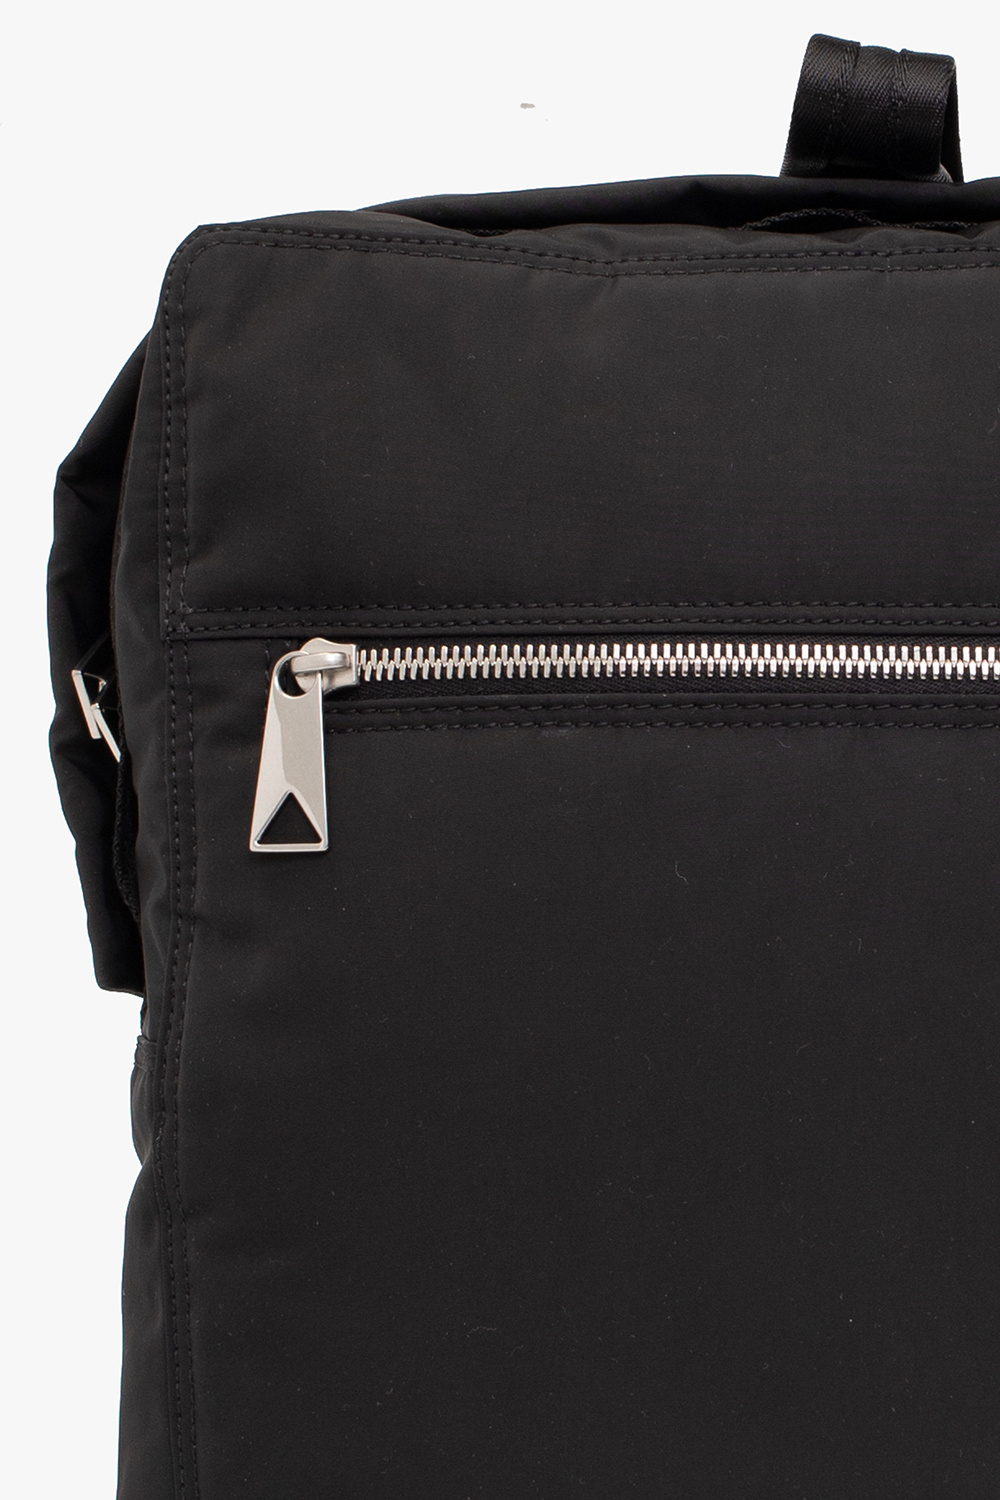 Bottega Veneta Backpack with pockets